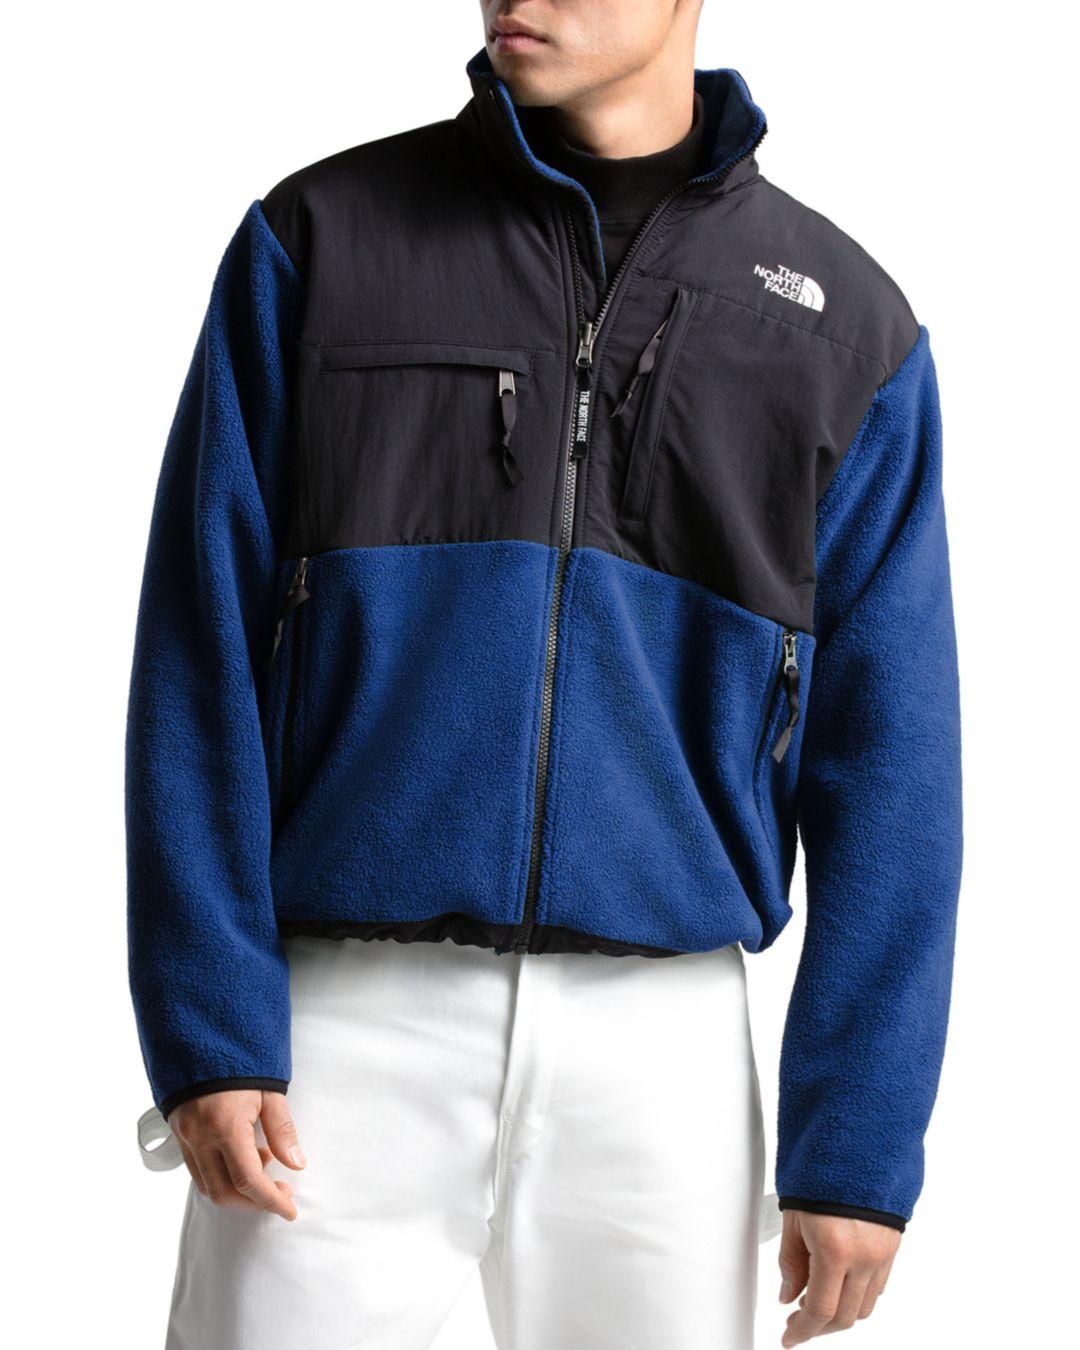 The North Face 95 Retro Denali Fleece Jacket in Blue for Men - Lyst